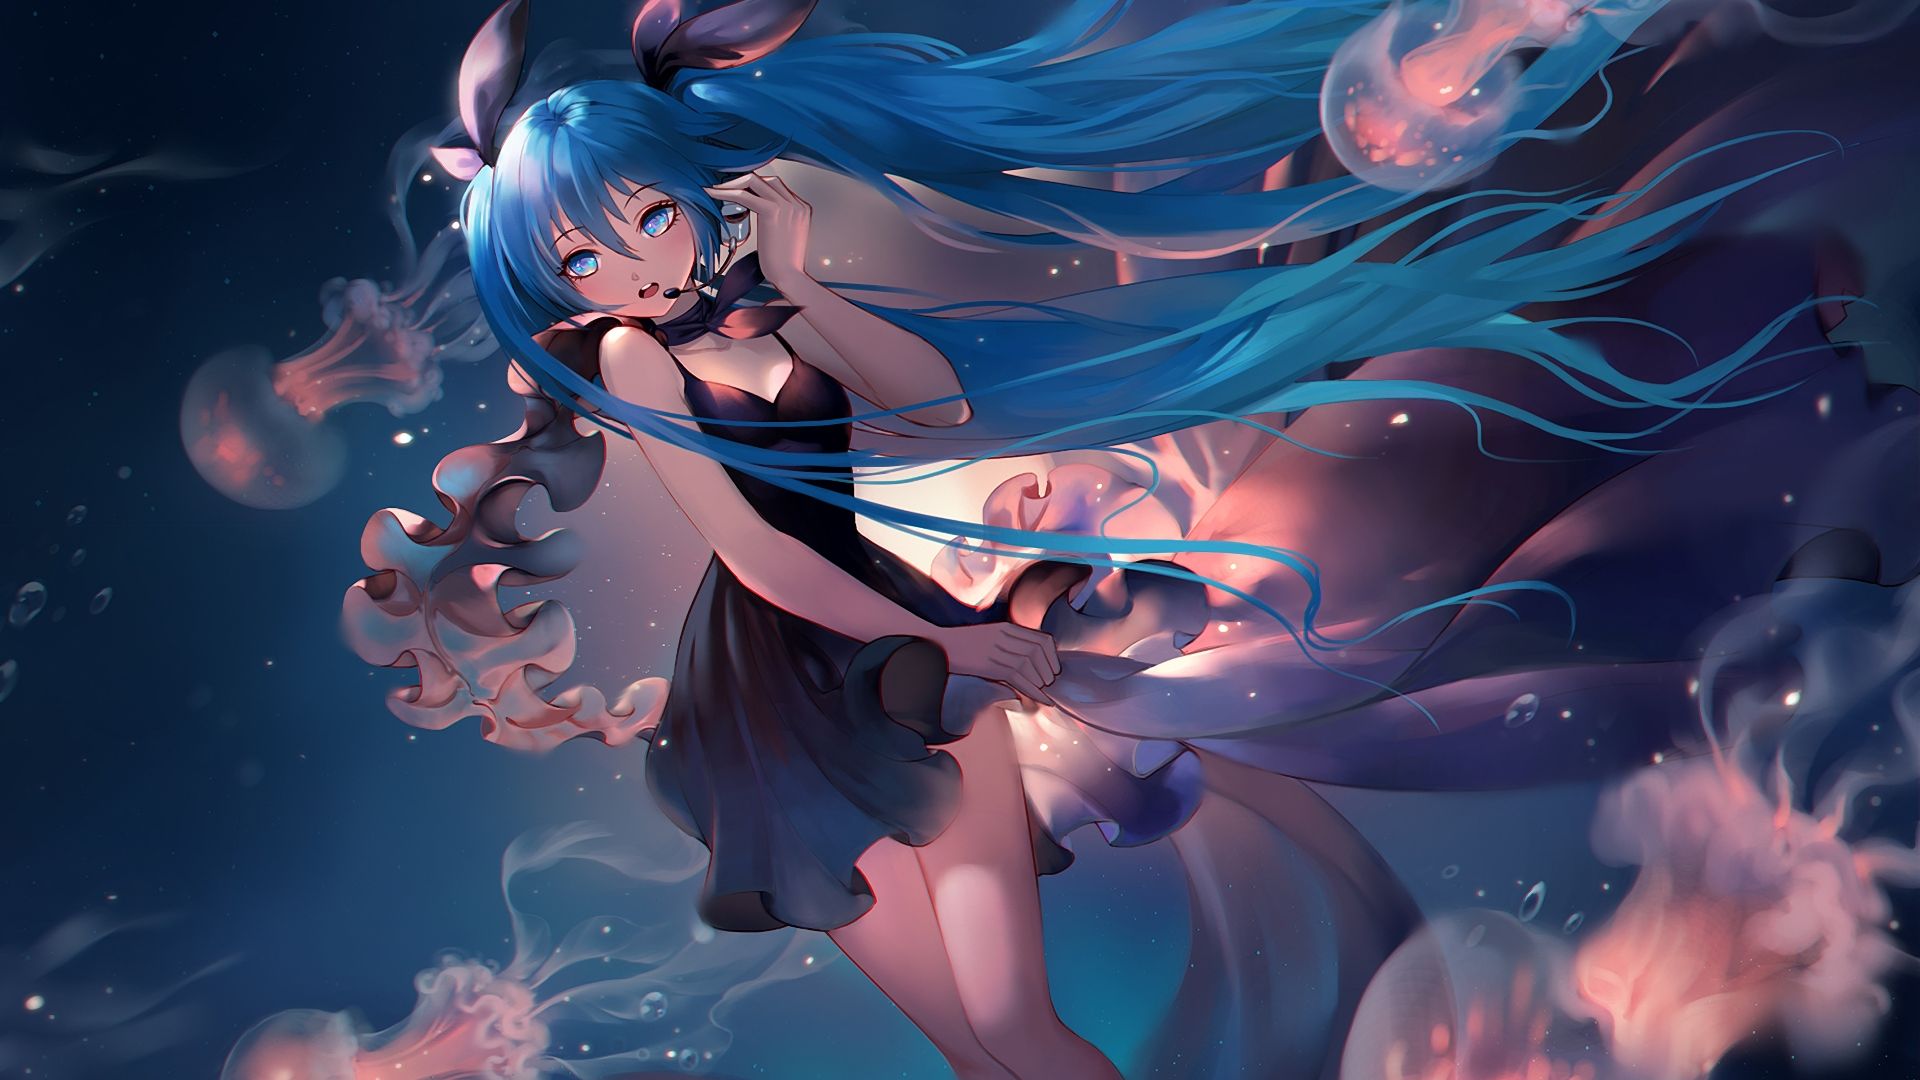 Wallpaper ID 167844  beatiful sweet cute kawaii cool blue hair anime  girl weapon blue eyes long hair sword free download